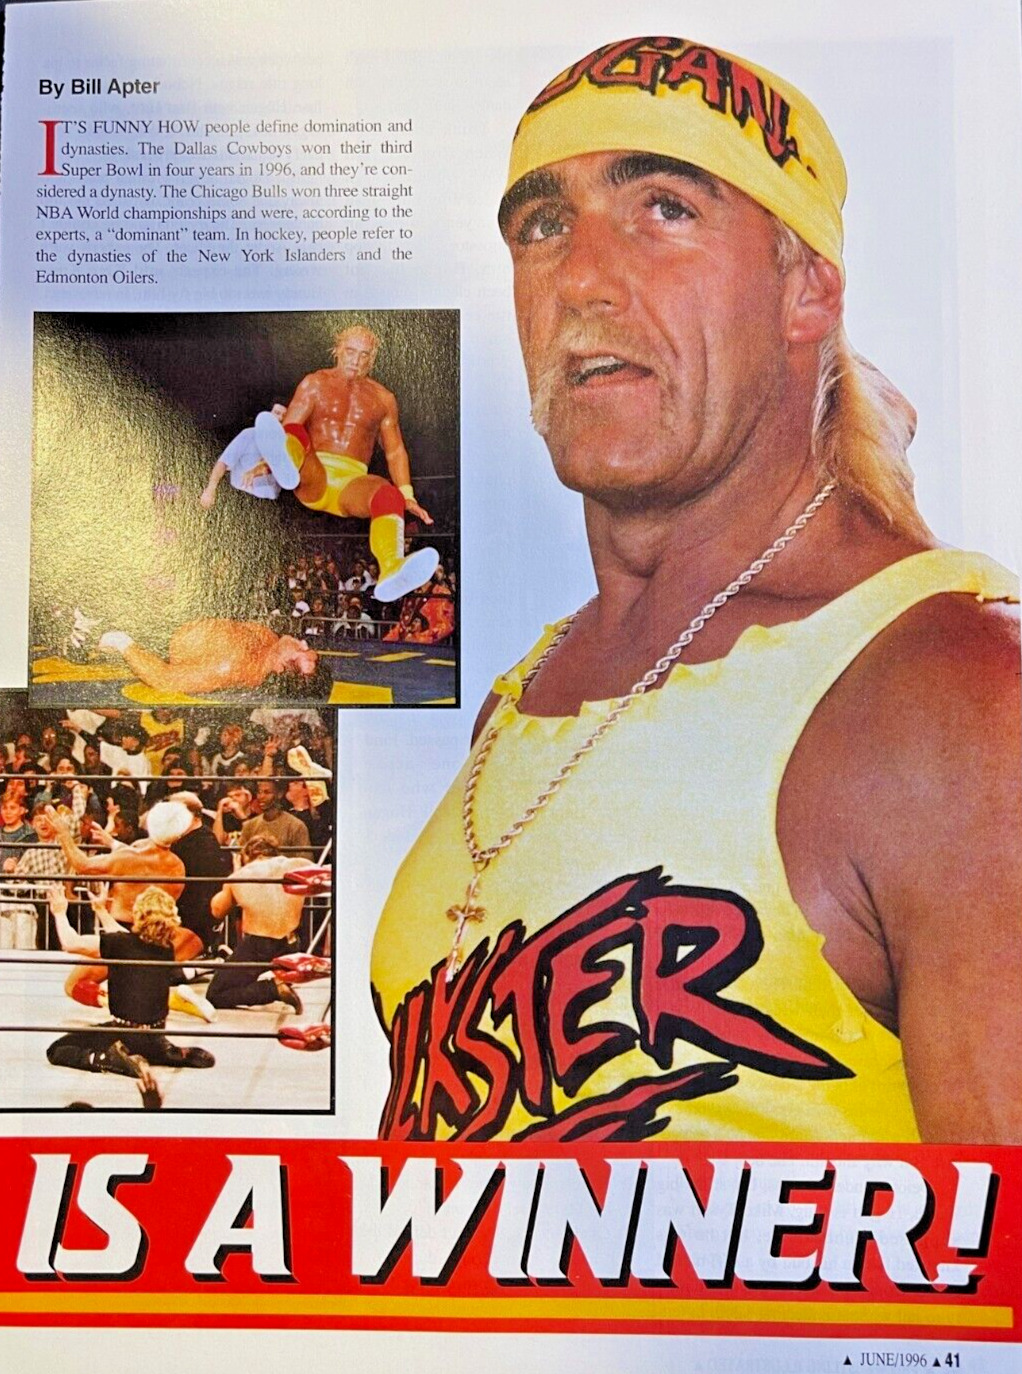 1996 Pro Wrestler Hulk Hogan